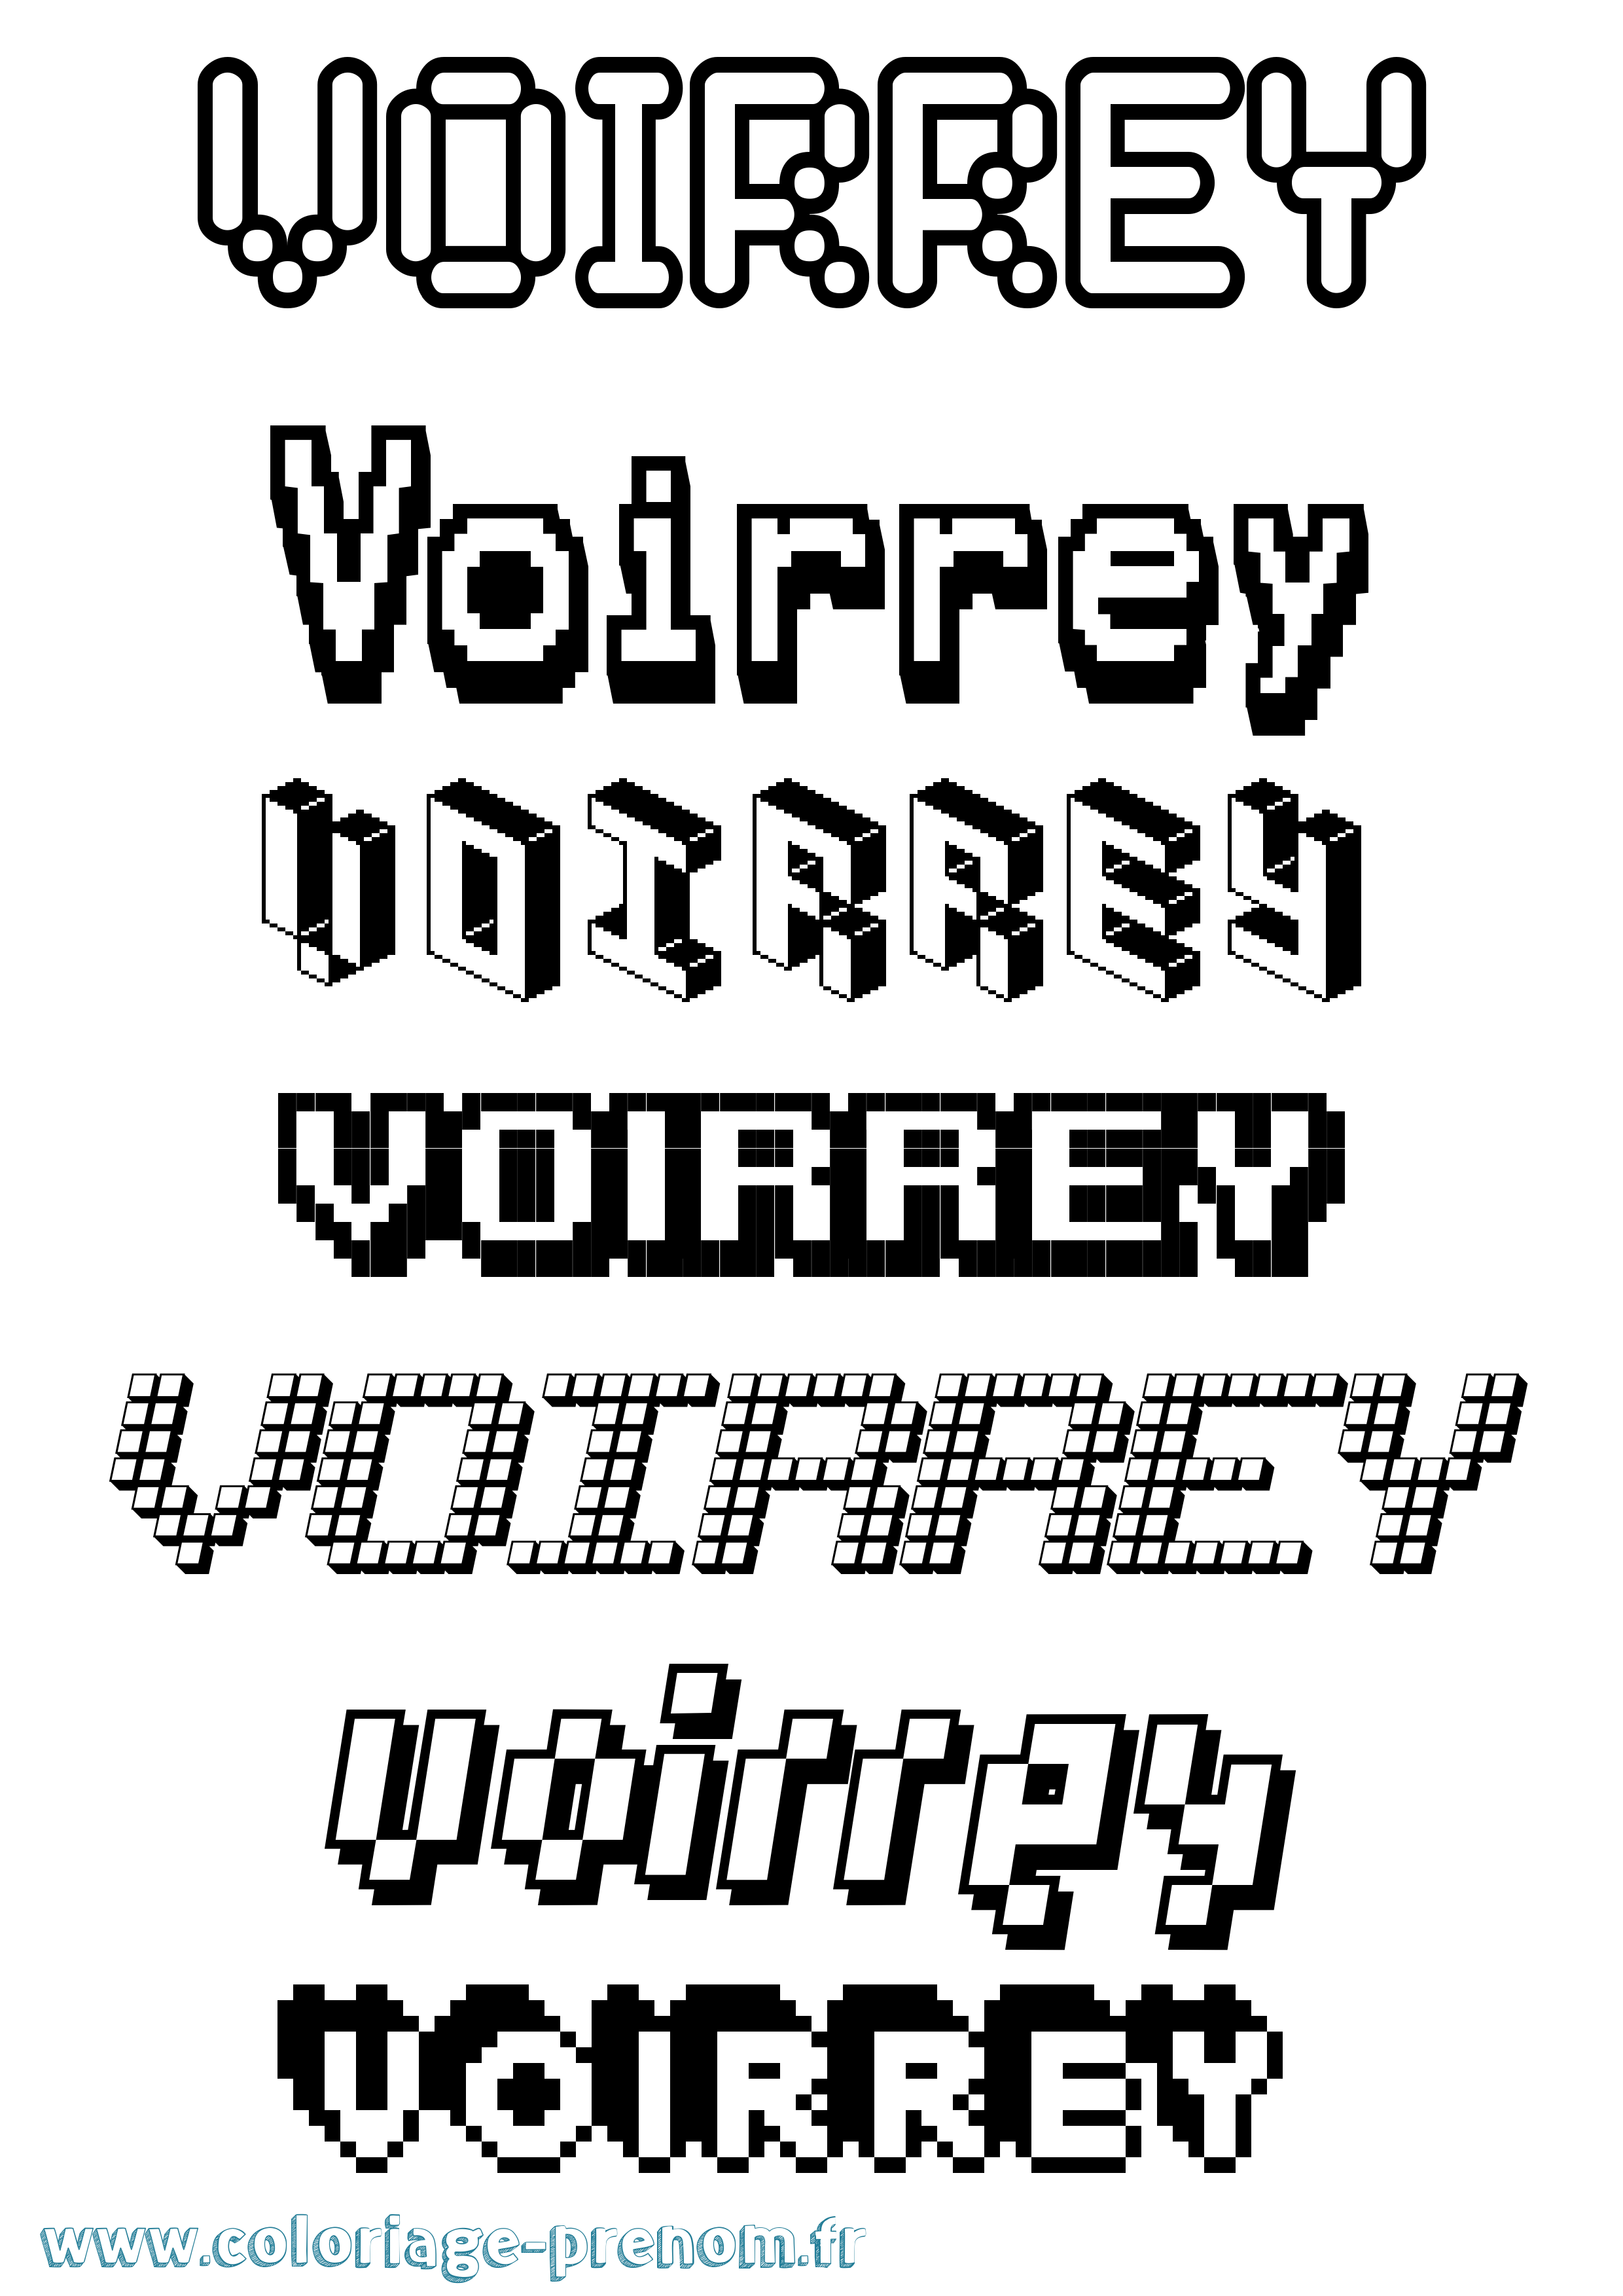 Coloriage prénom Voirrey Pixel